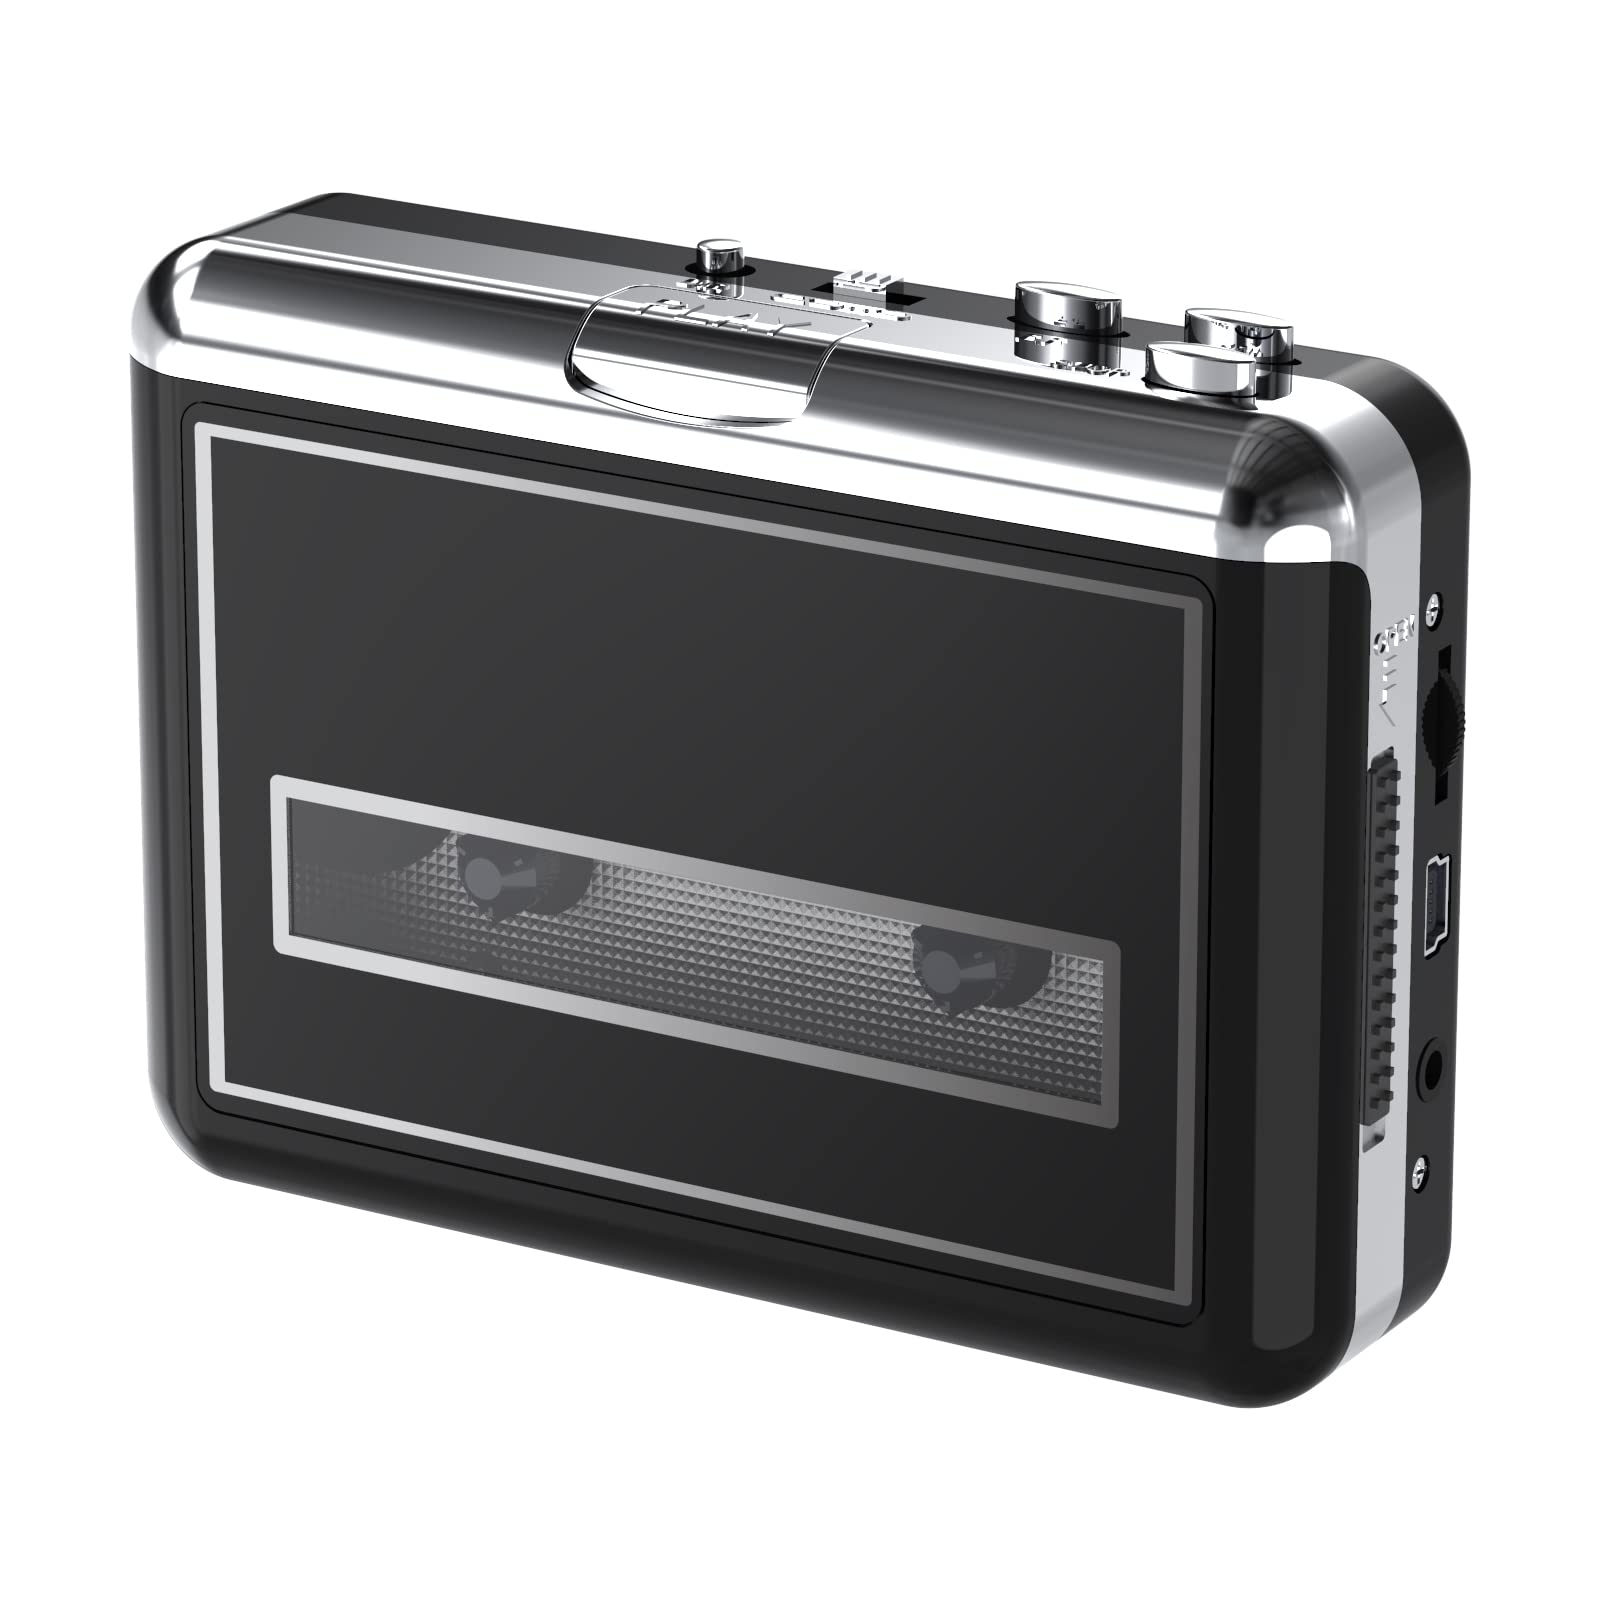 Cassette Player Portable Walkman Convert Tapes to Digital MP3 Converter